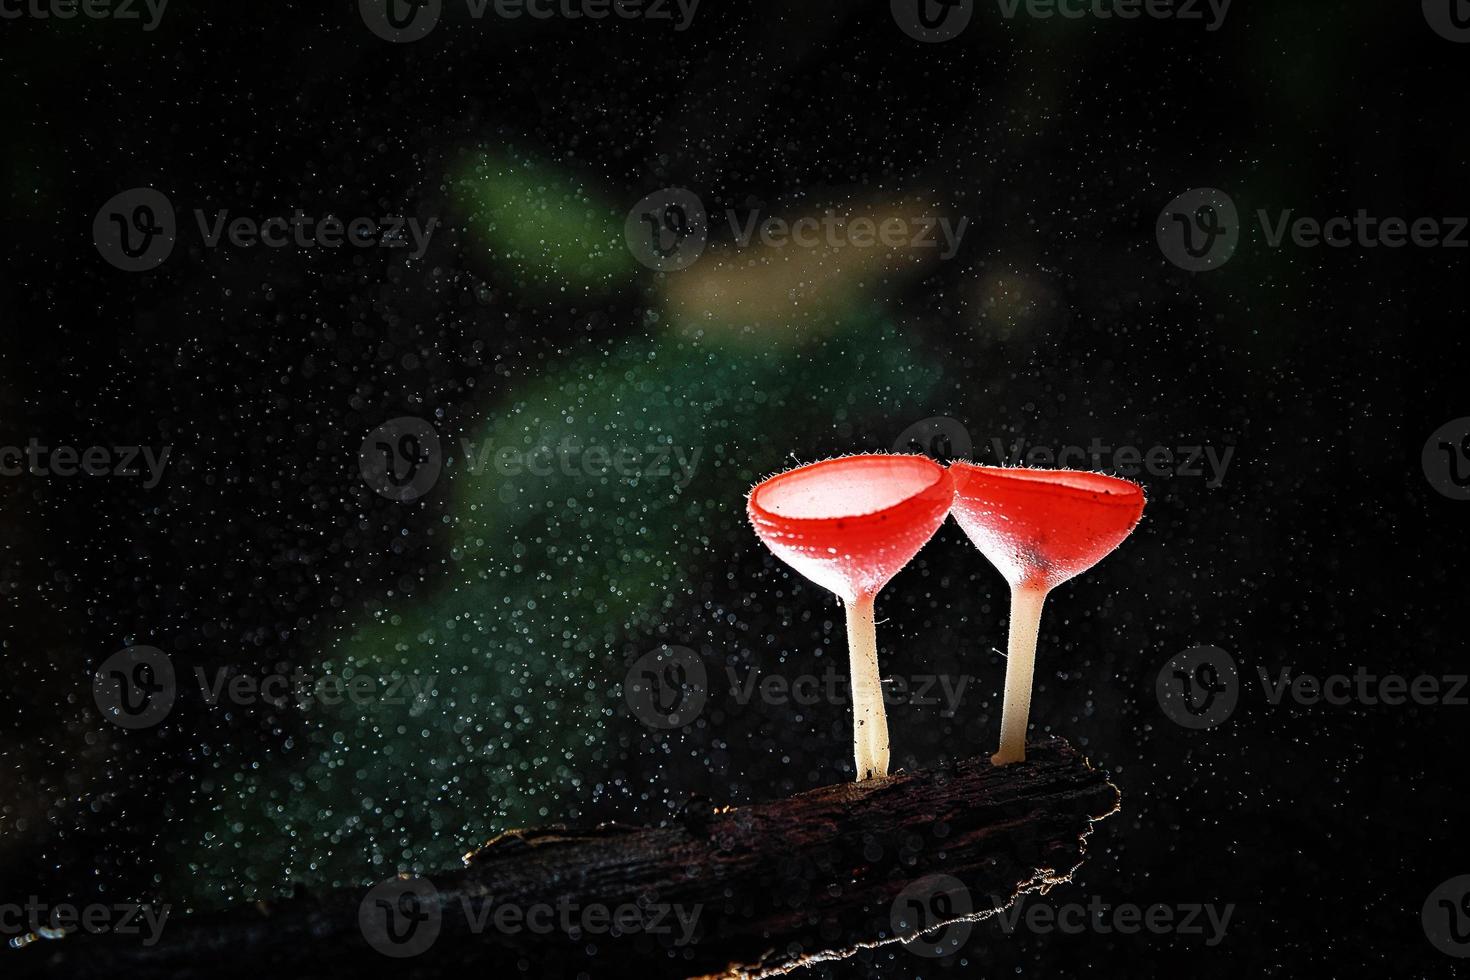 Mushrooms fungi cup. photo